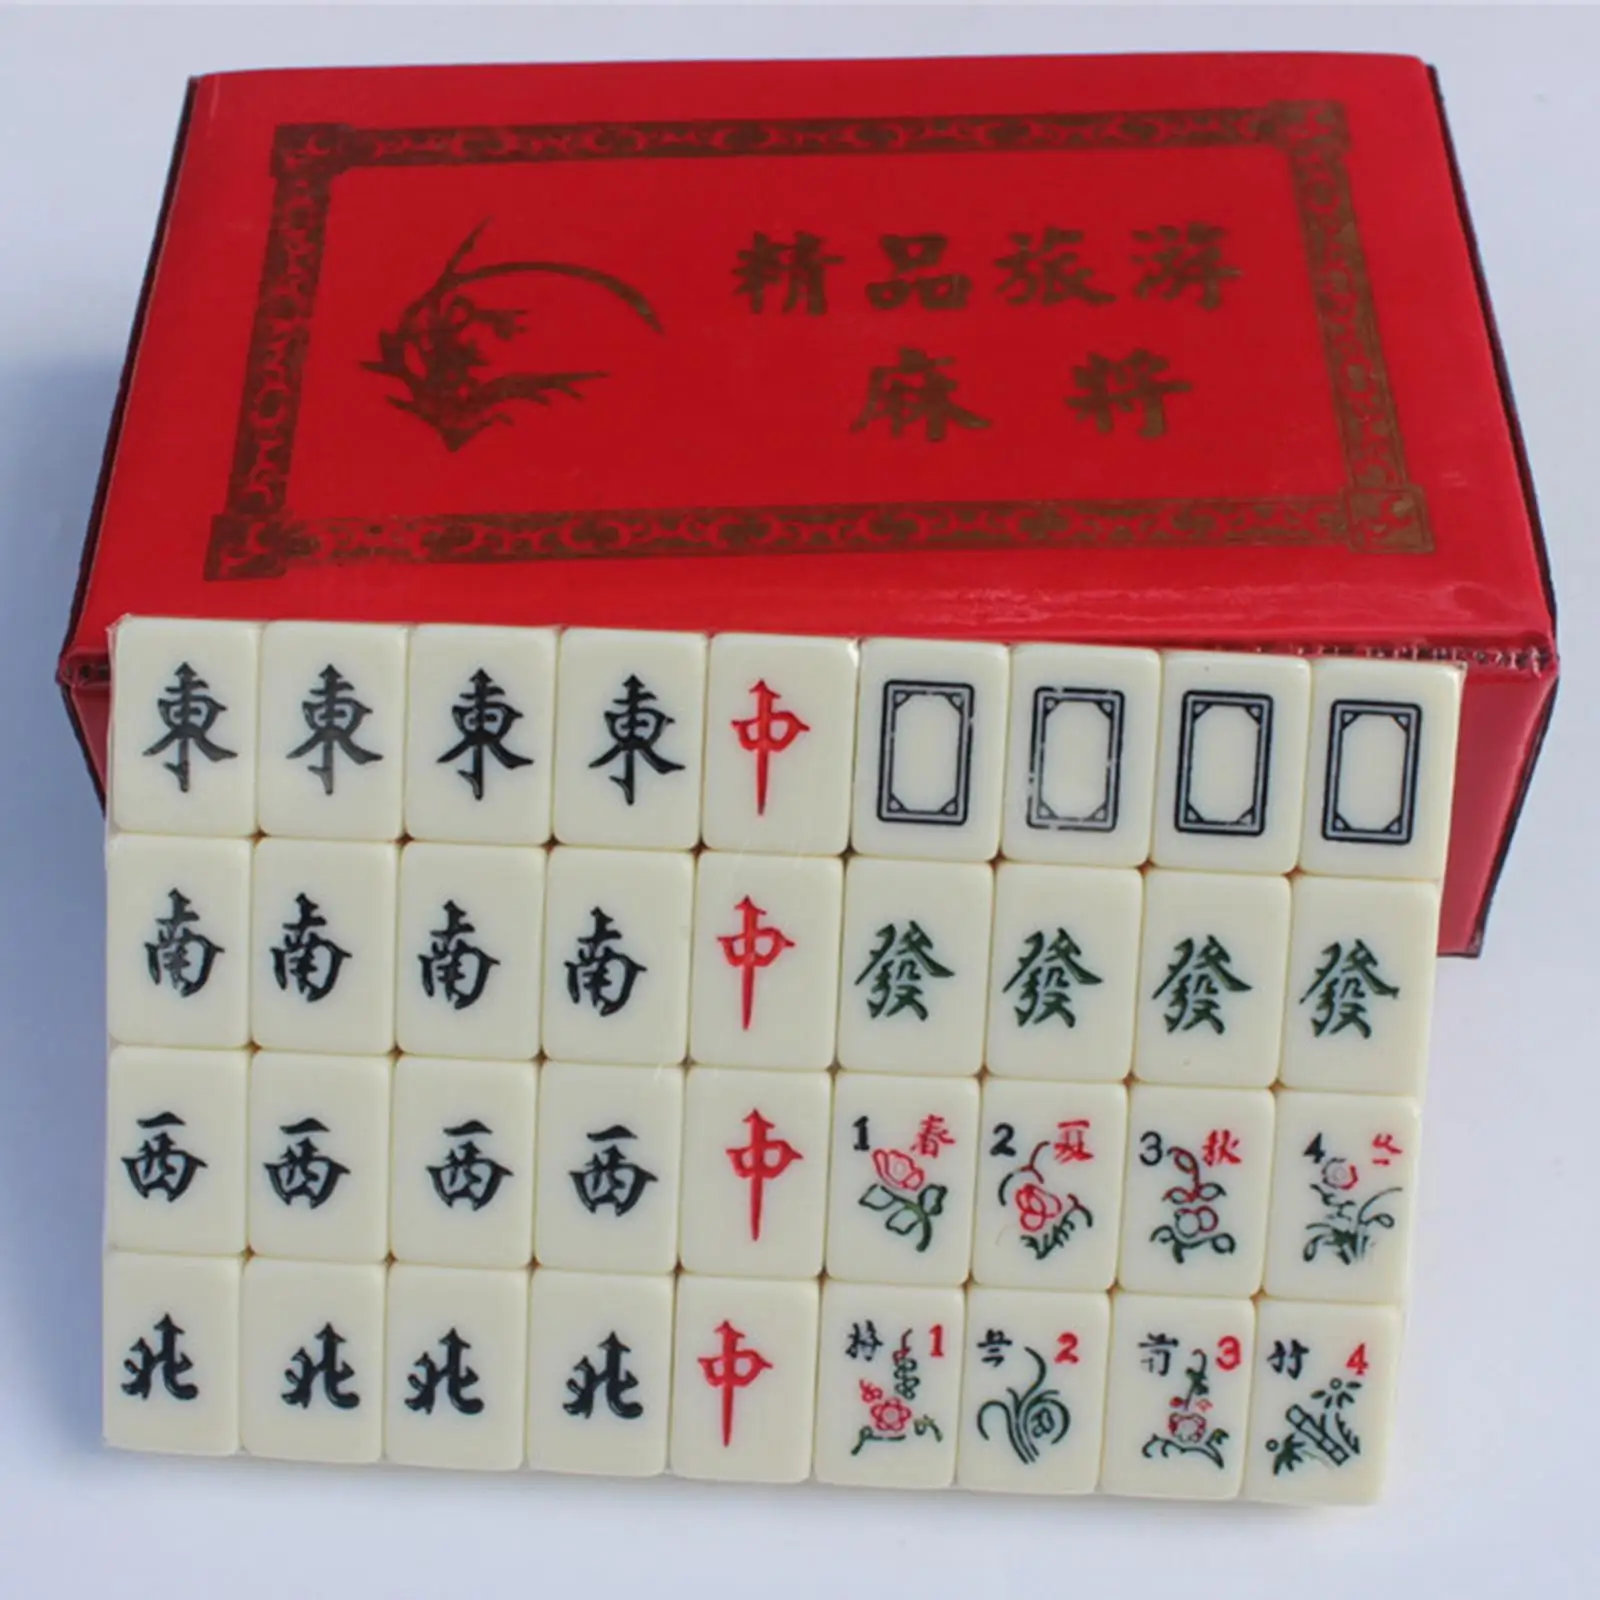 Complete Mahjong Game Set Board Game mahjong Tiles Game for Family game